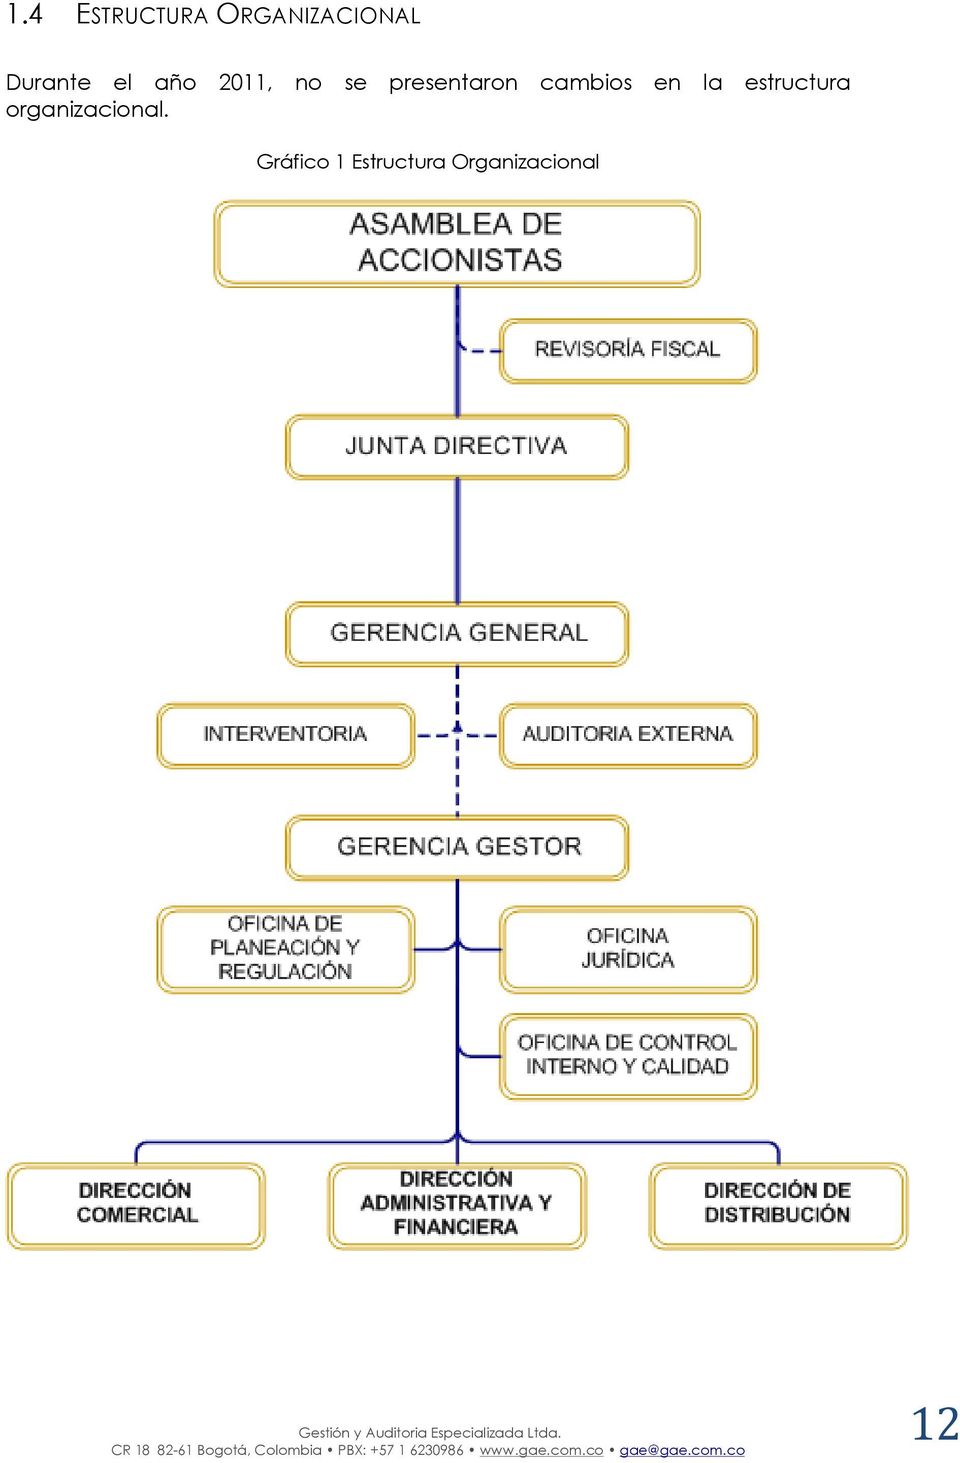 estructura organizacional.